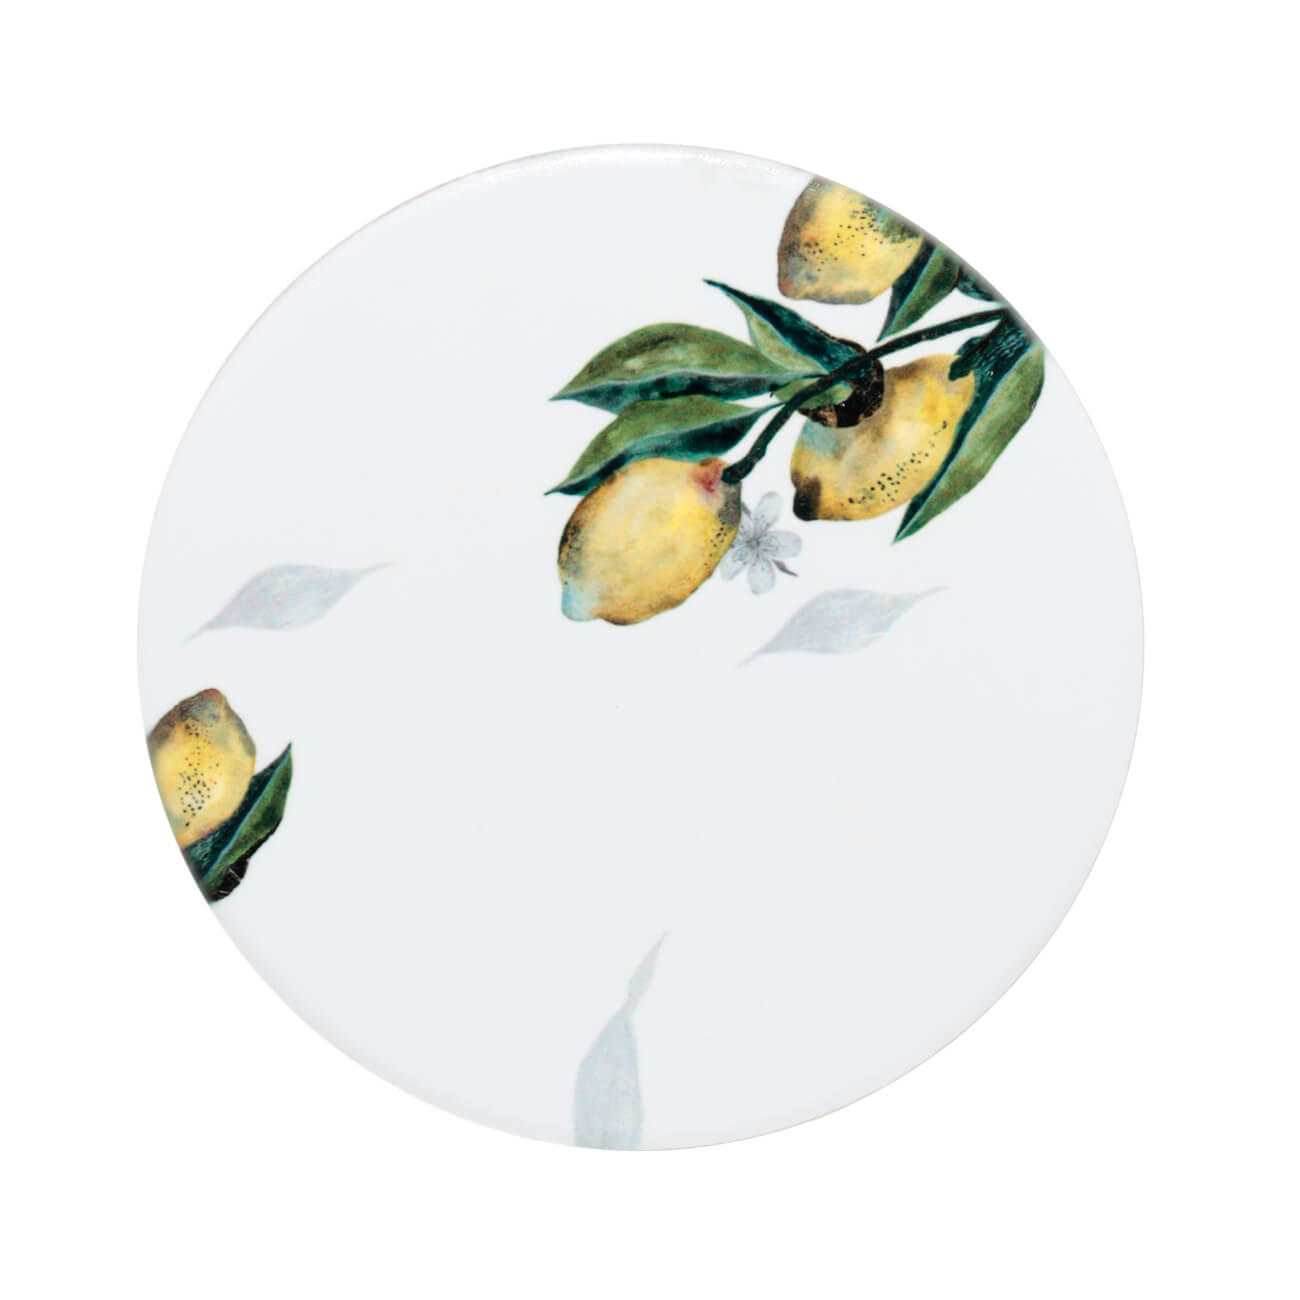 Подставка под кружку, 11 см, керамика/пробка, круглая, белая, Лимоны, Sicily in bloom подставка под кружку 11 см керамика пробка круглая климт поцелуй art поцелуй